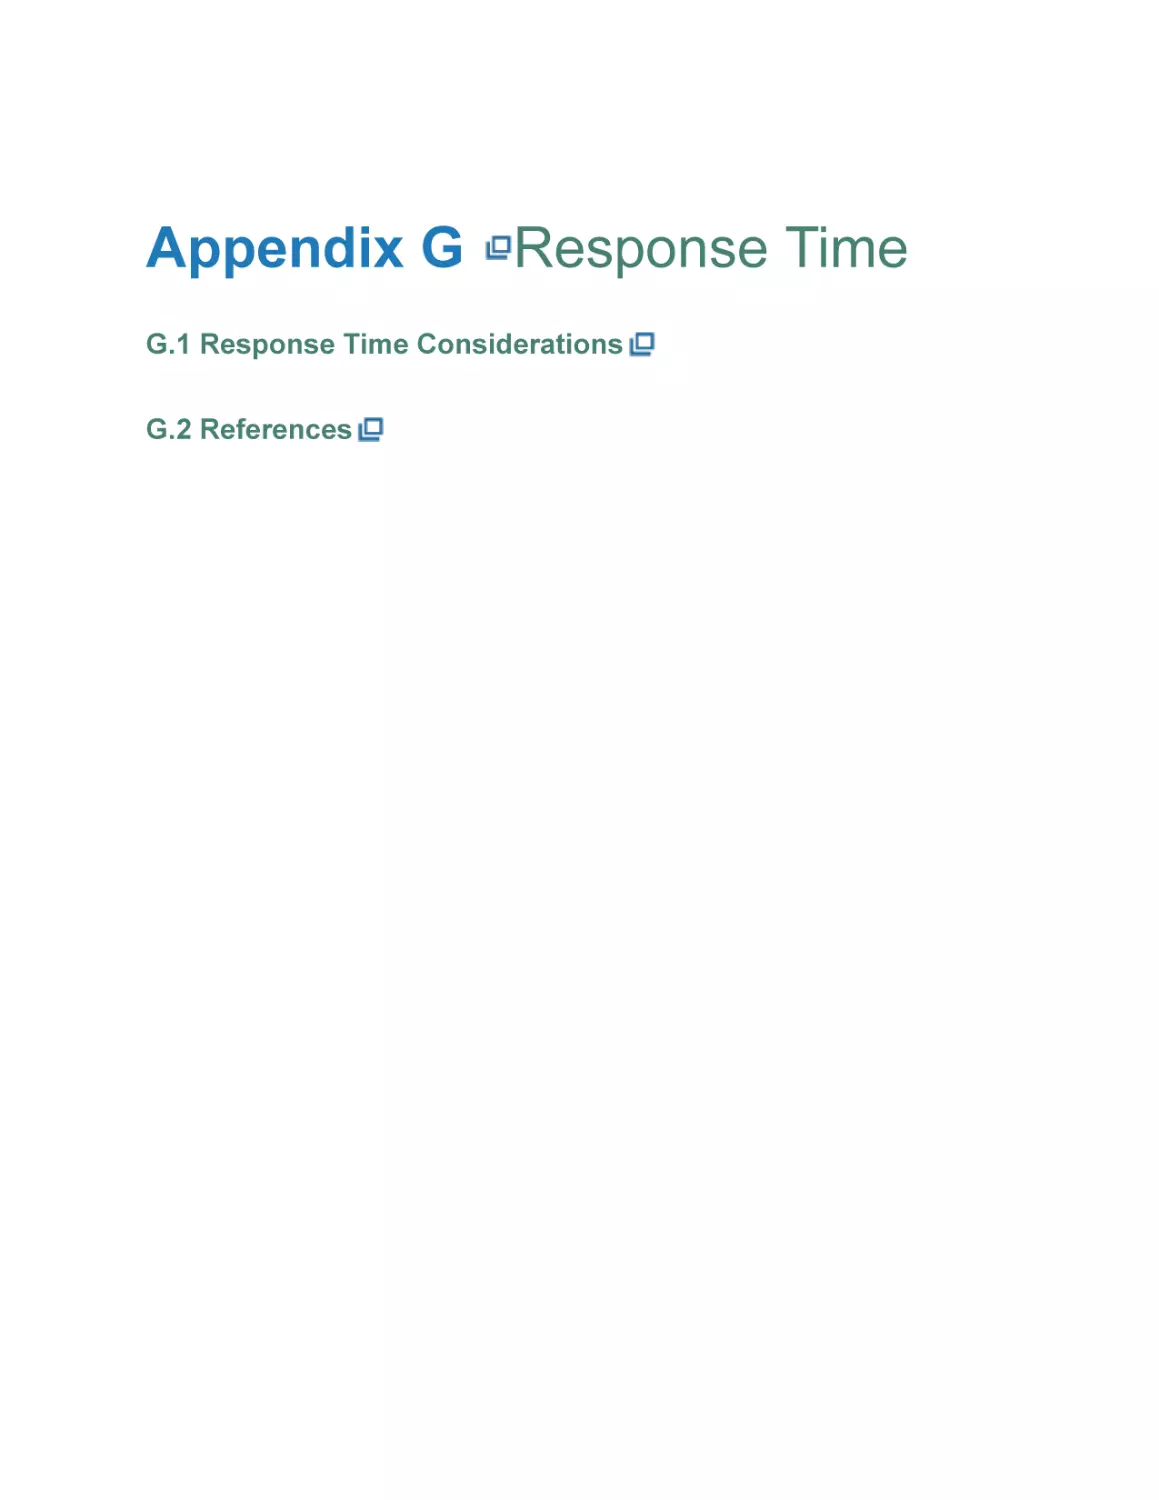 Appendix G Response Time